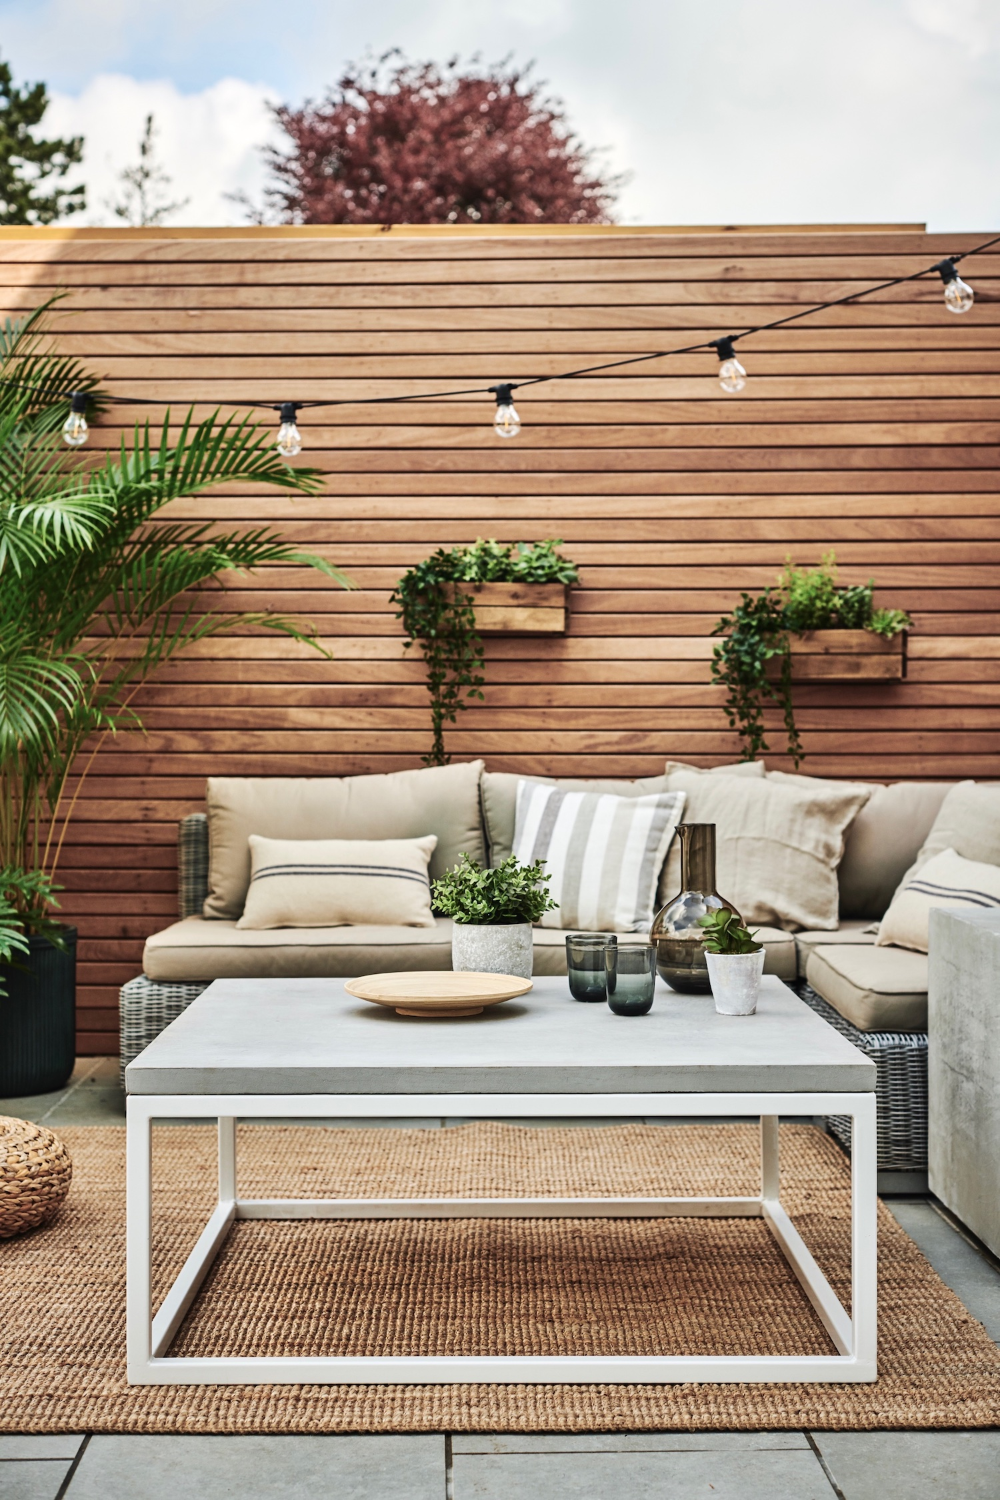 Creative Backyard Patio Designs to Transform Your Outdoor Space